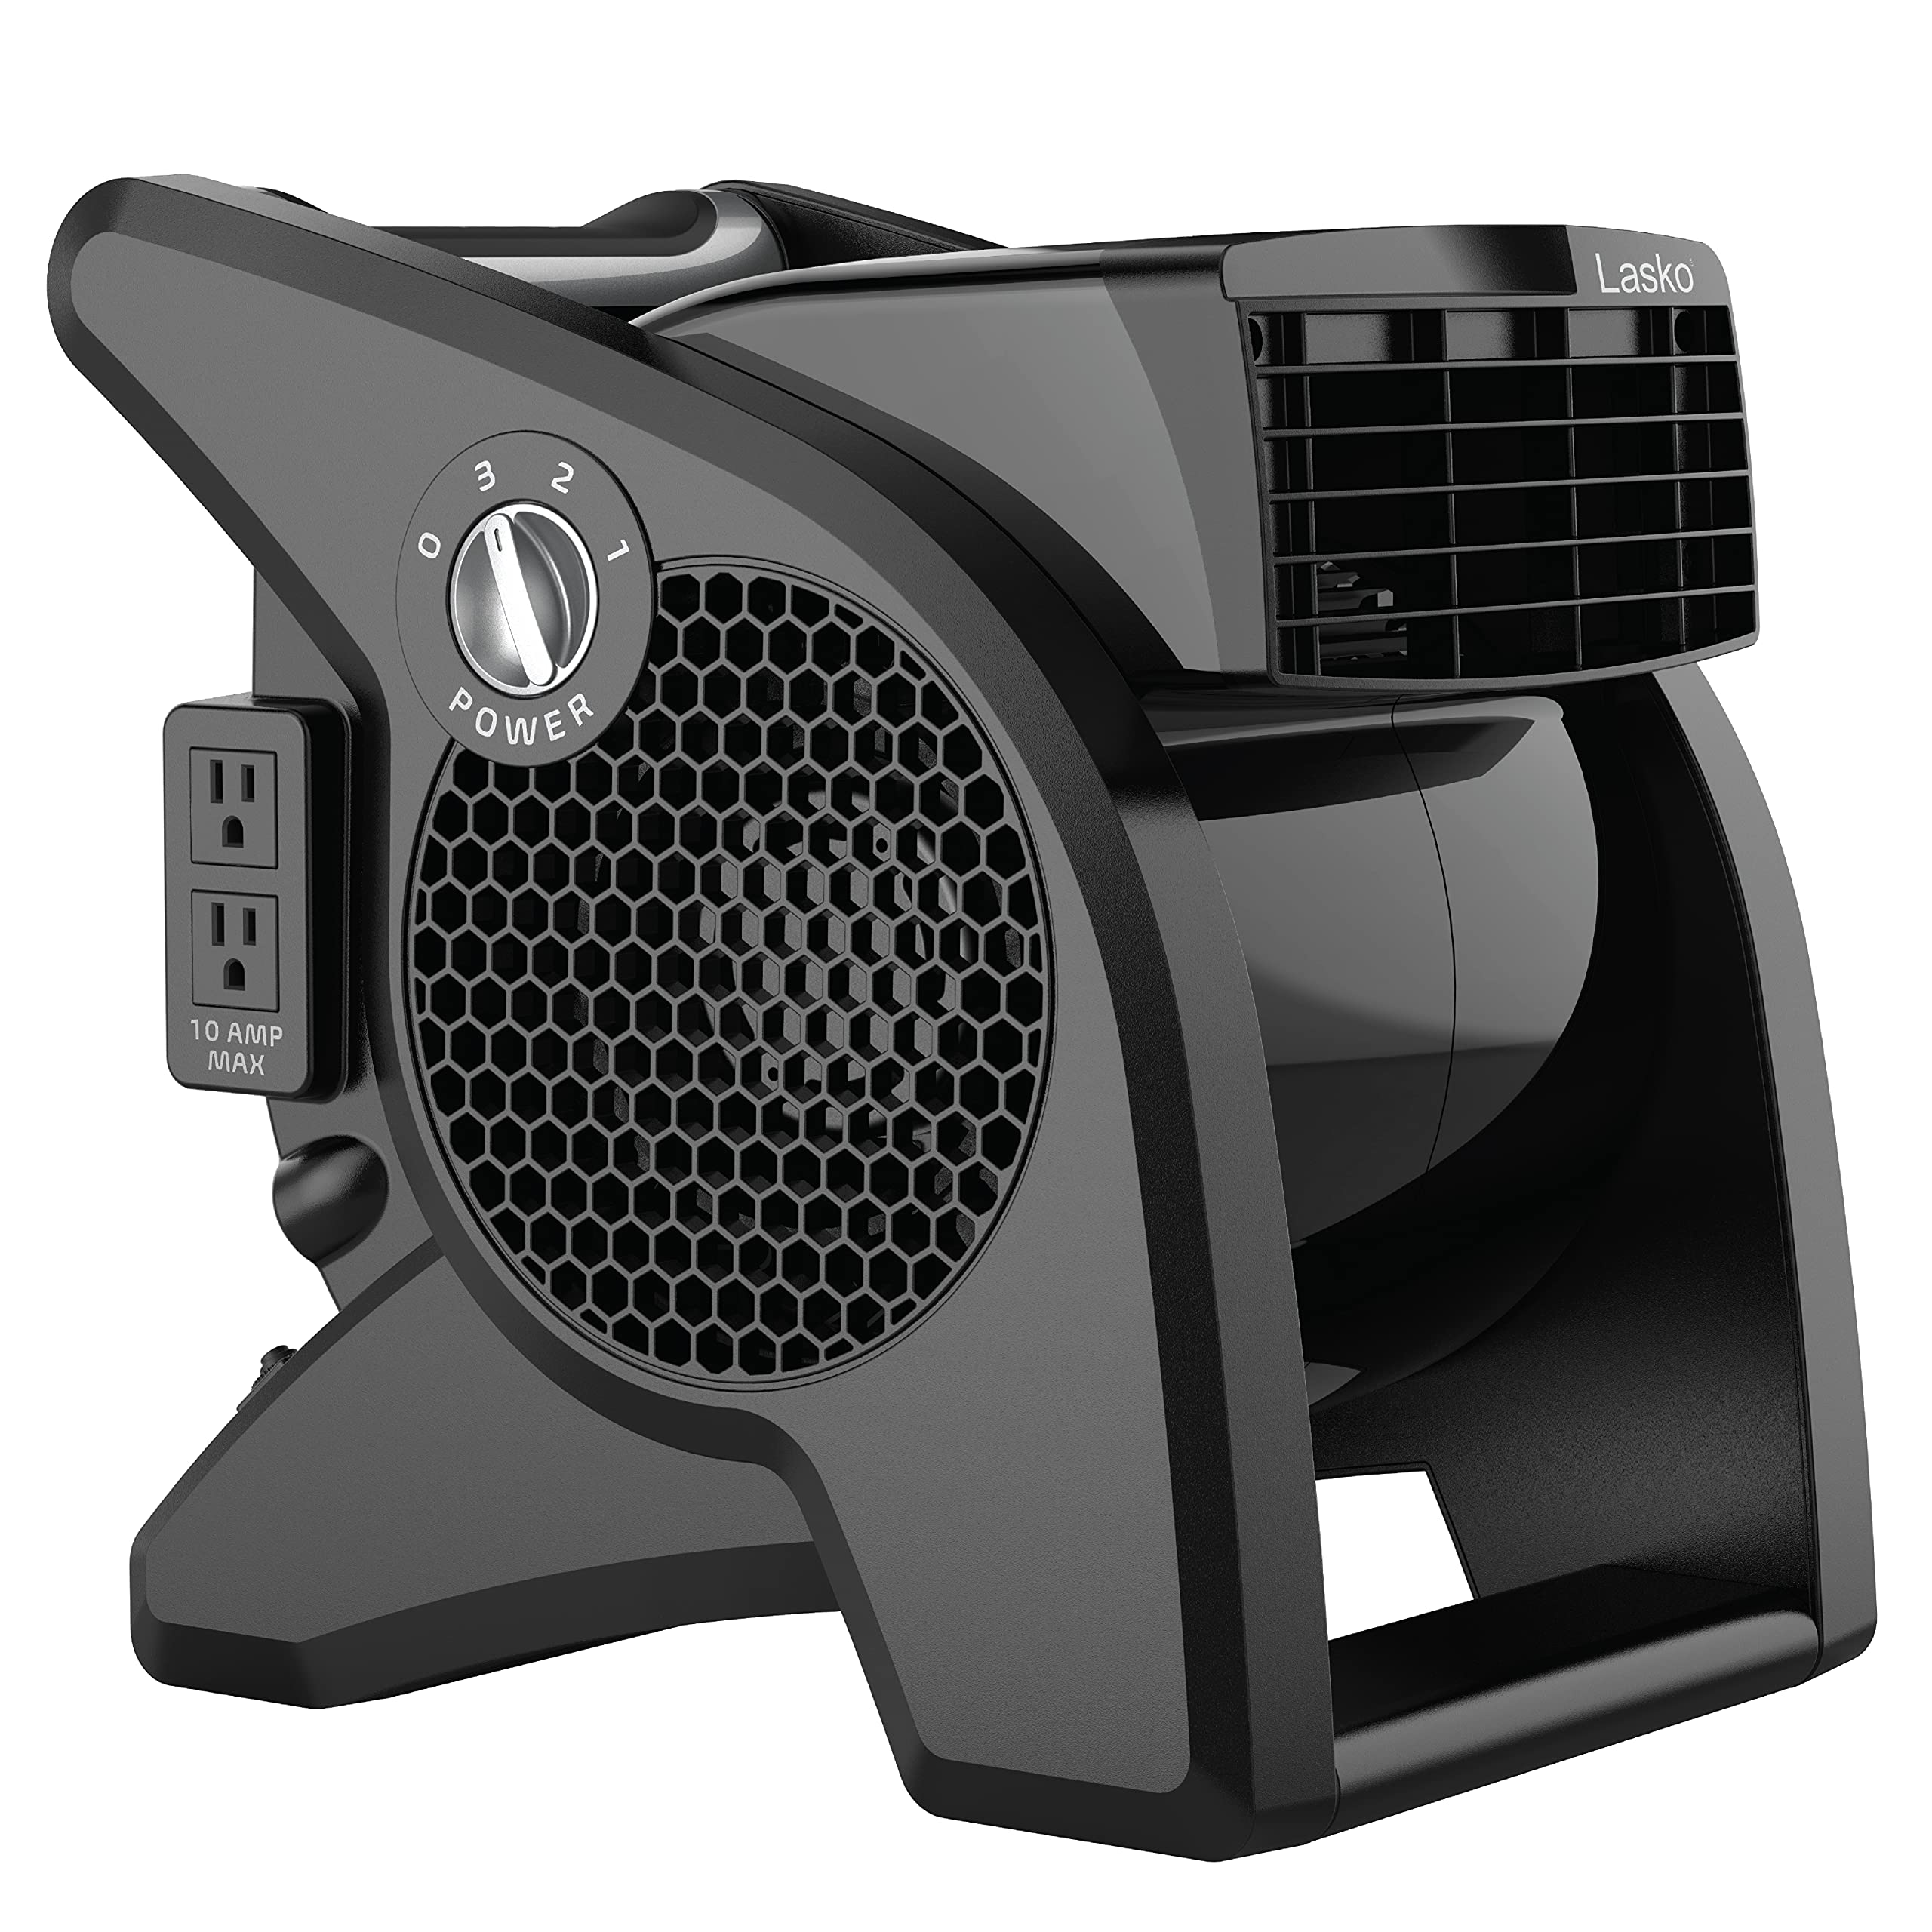 Lasko High Velocity Pro-Performance Pivoting Utility Fan for Cooling, Black Grey & U12104 High Velocity Pro Pivoting Utility Fan for Cooling, Ventilating, 12.2 x 9.6 x 12.3 inches, Black